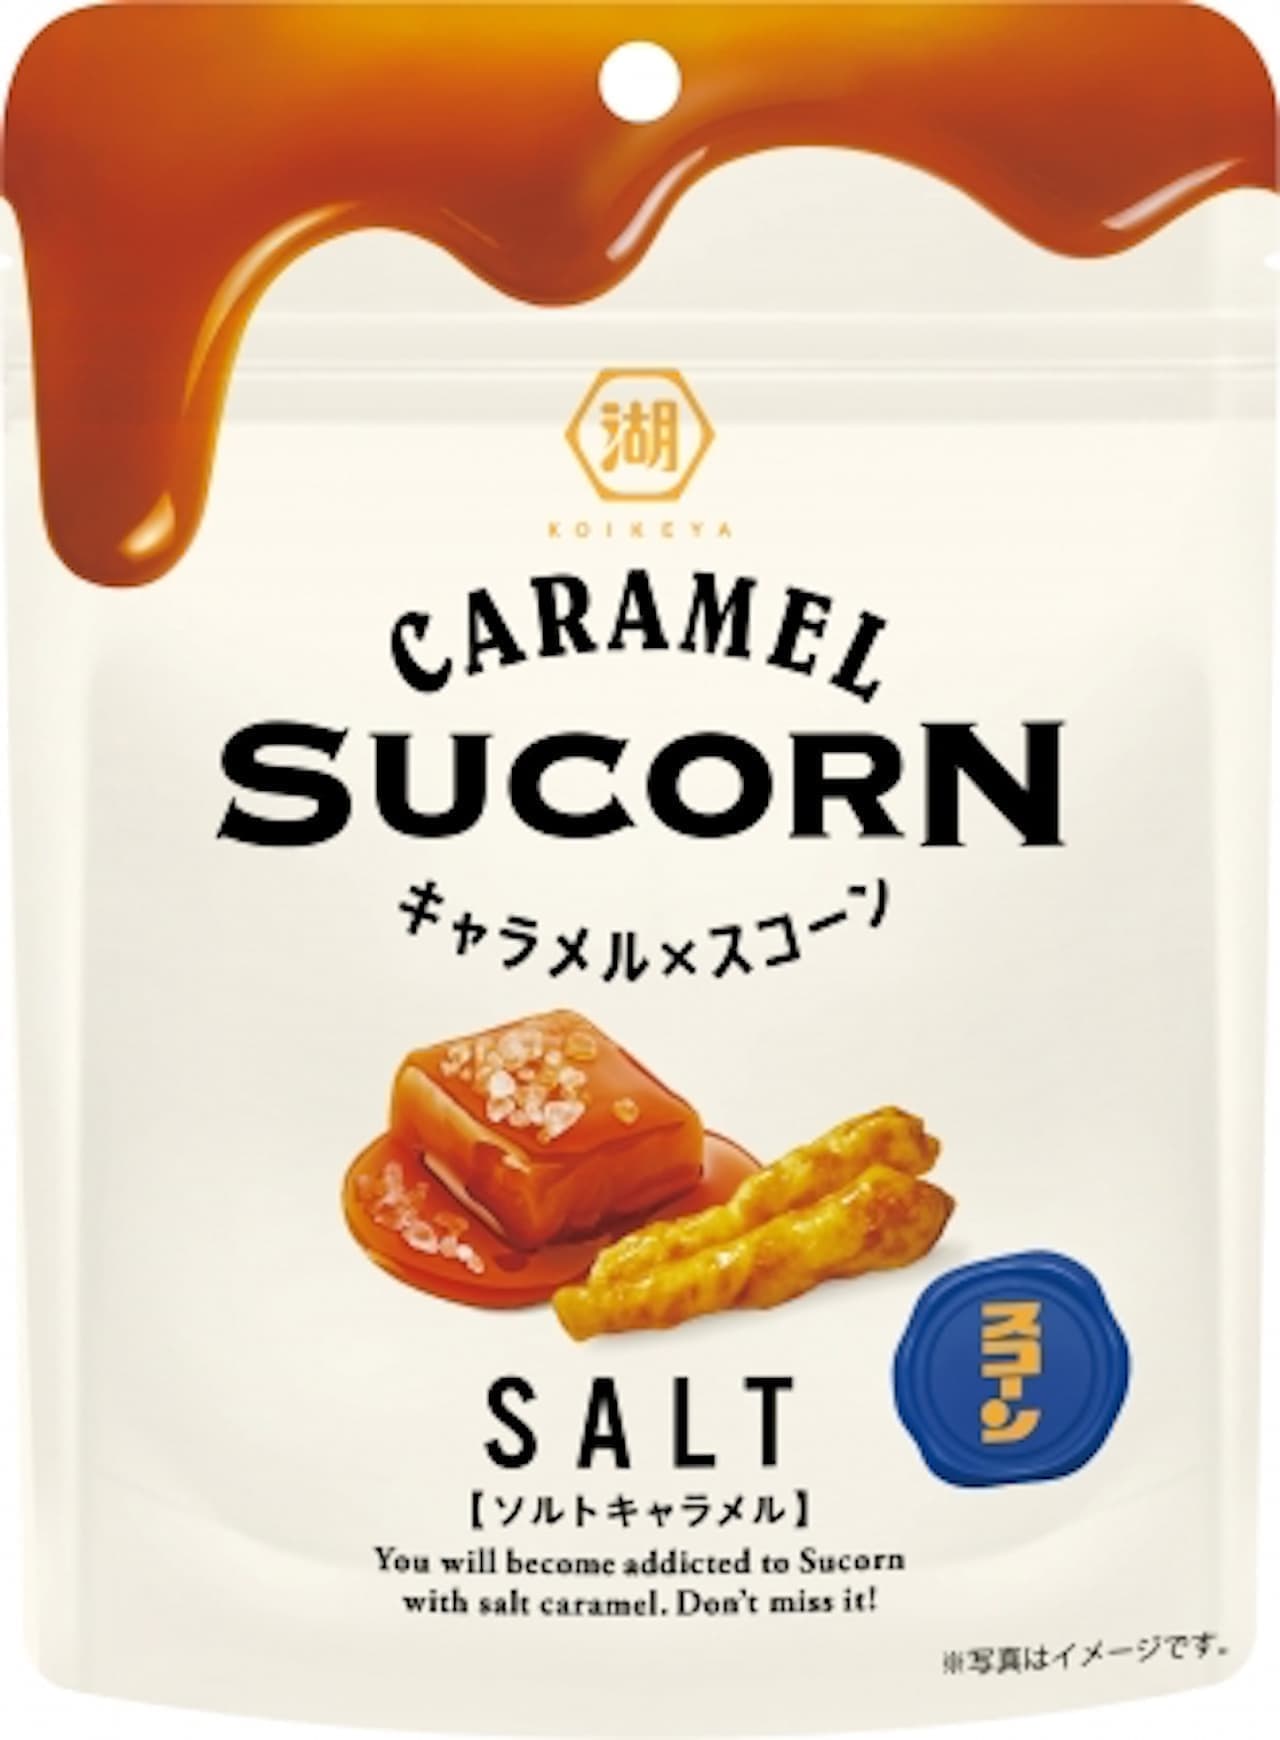 Koikeya "Caramel x Scone Salt Caramel"